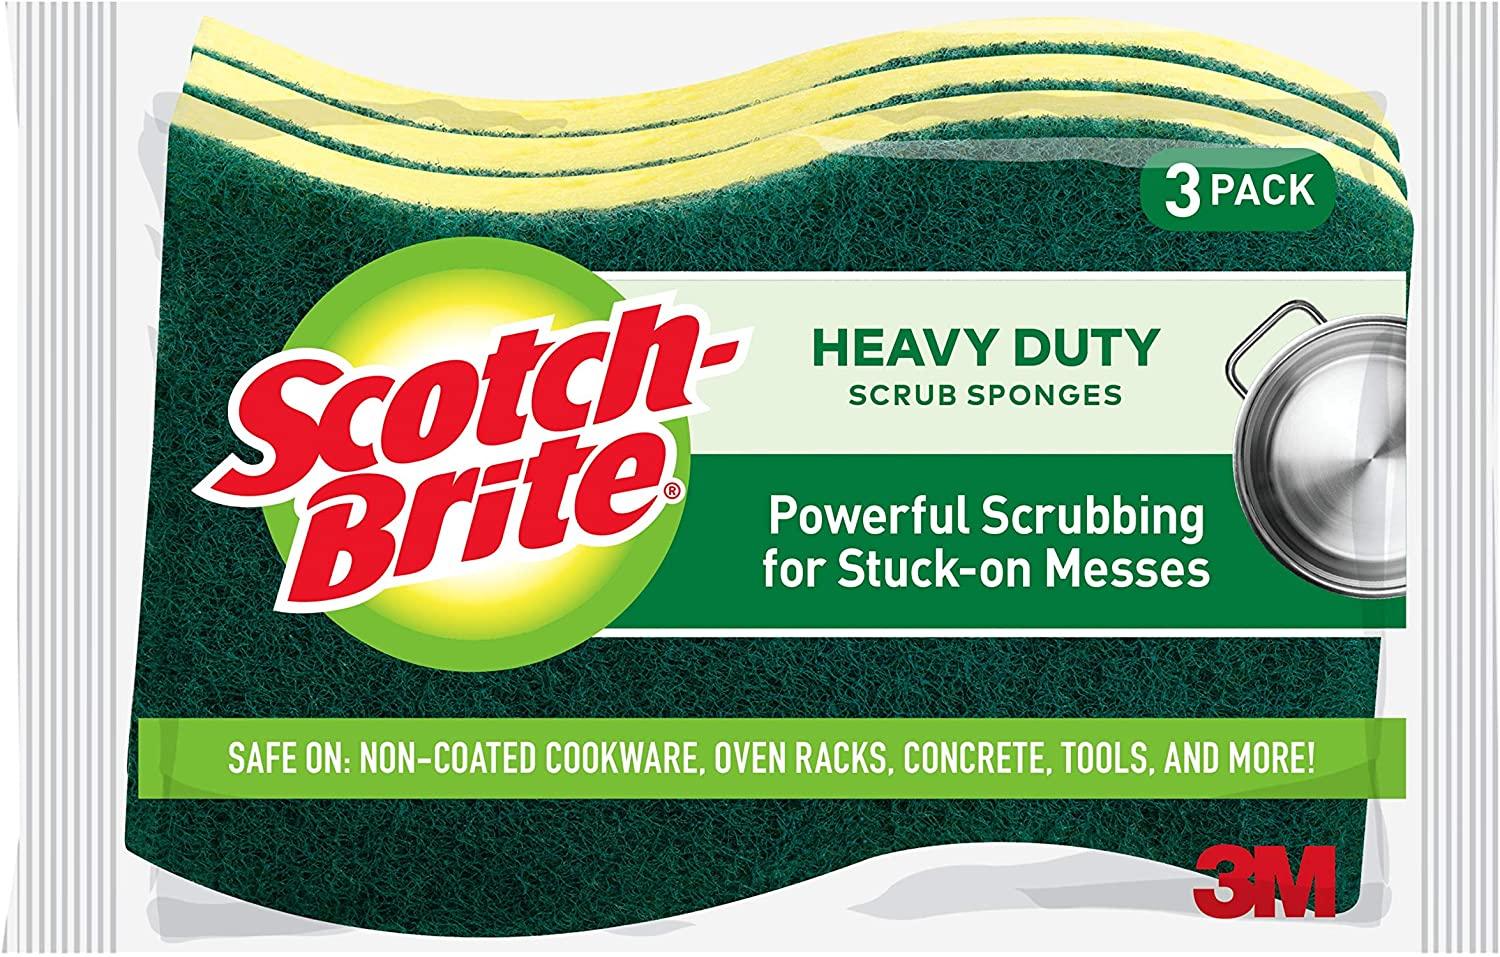 3 Scotch-Brite Heavy Duty Scrub Yellow Green Sponges for $1.95 Shipped